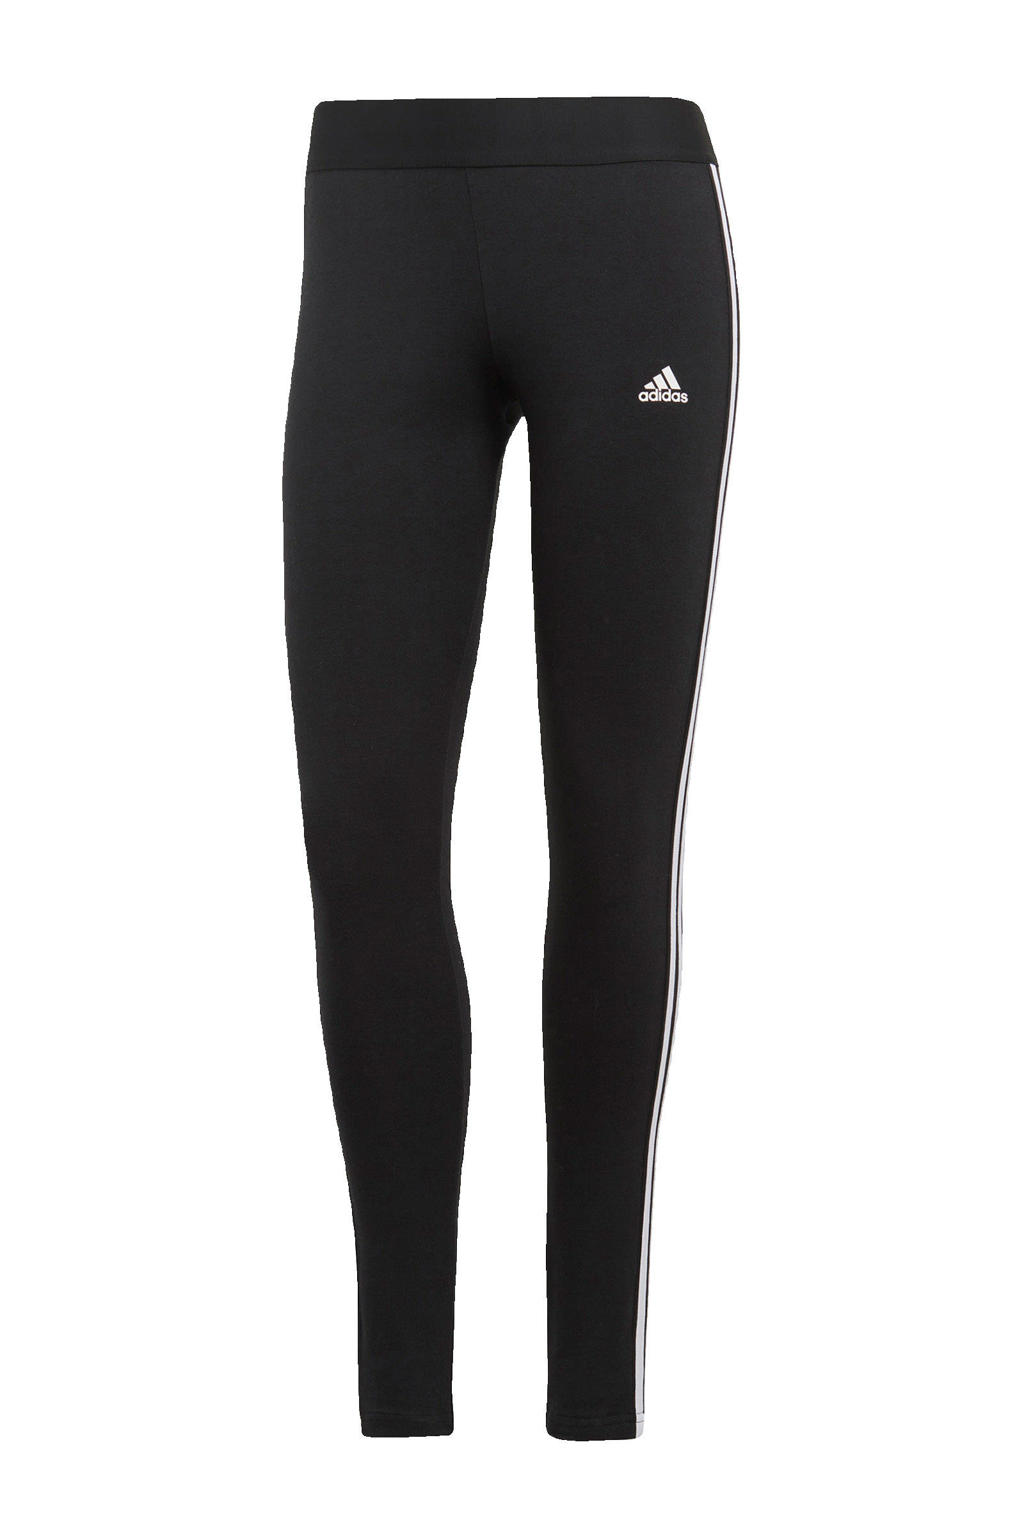 Zwart en witte dames adidas Performance sportlegging van katoen met slim fit, regular waist en logo dessin